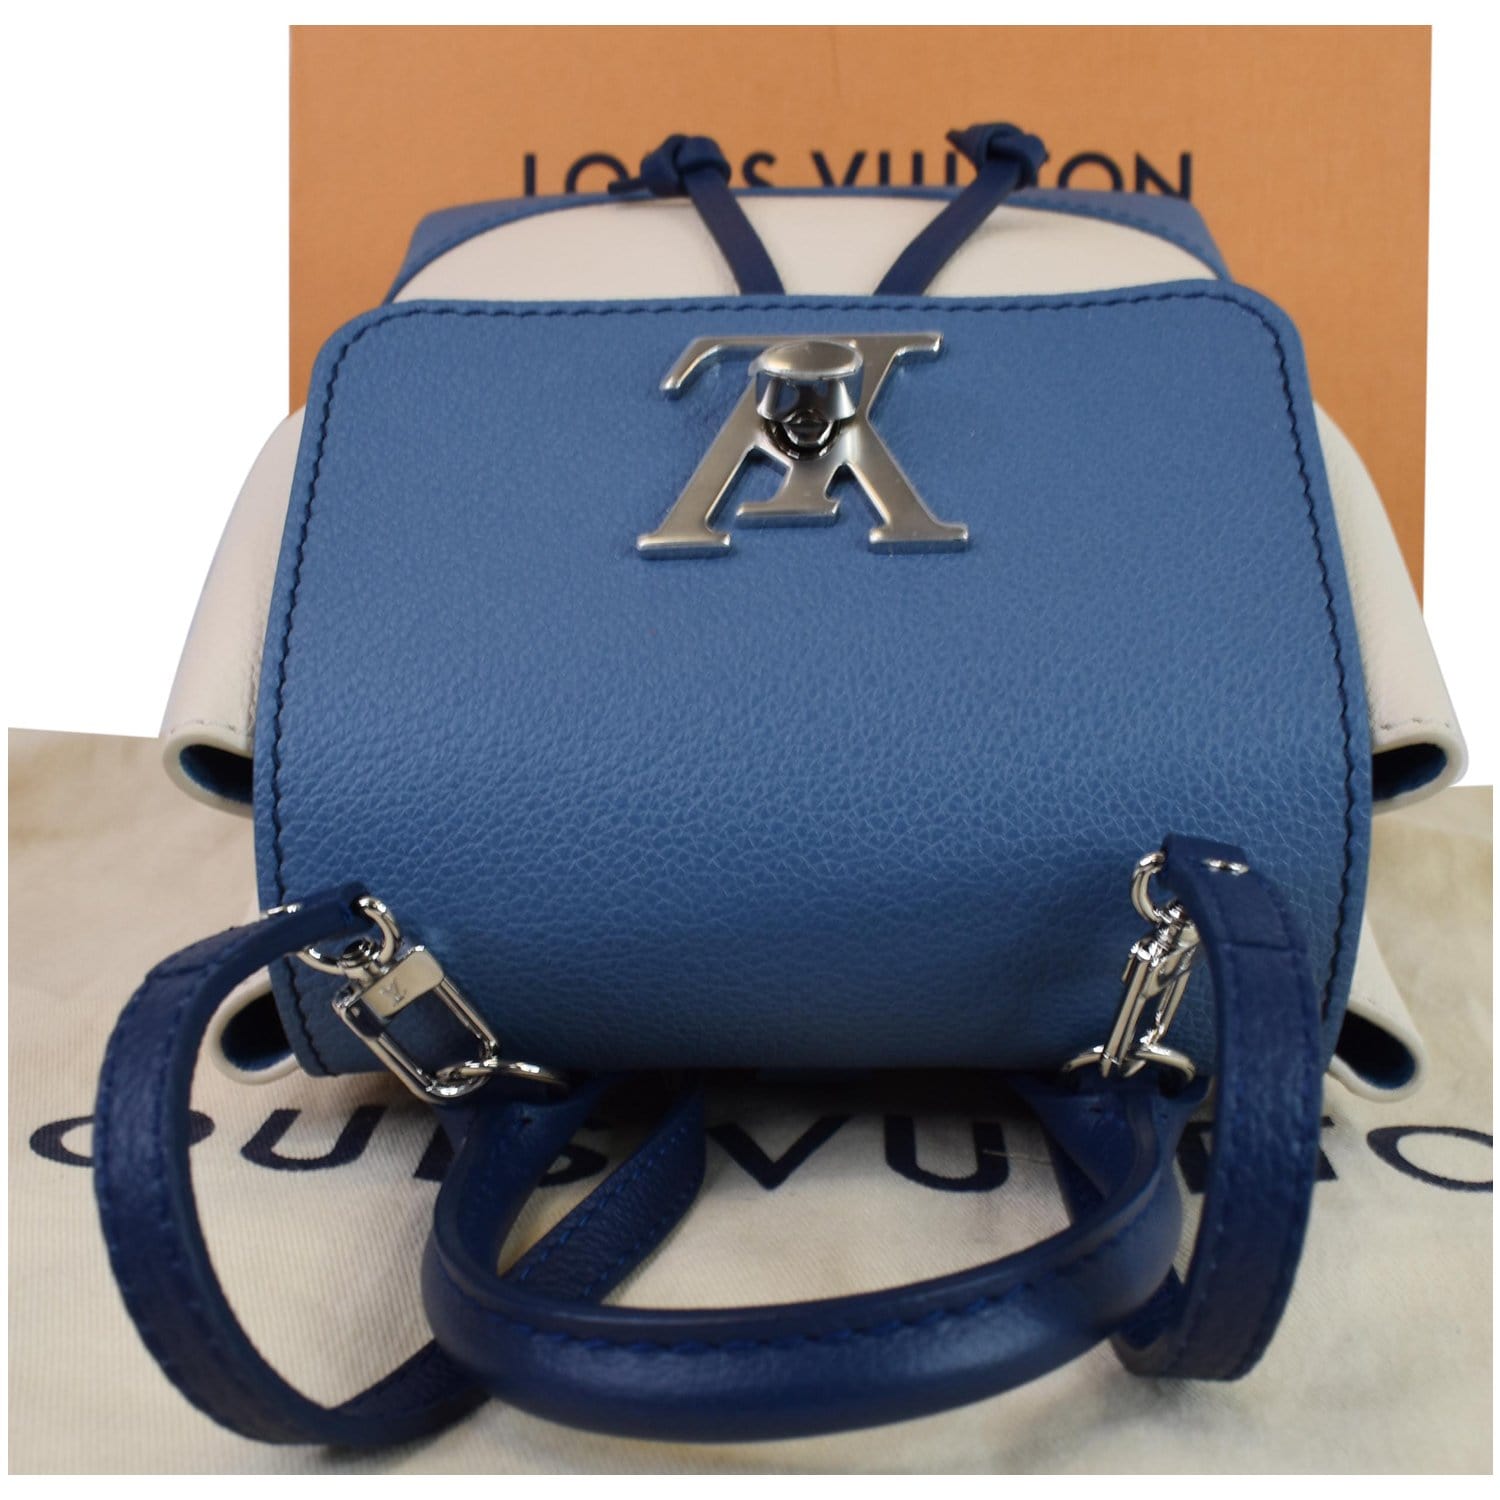 Louis Vuitton Beige/Blue Leather Lockme II Top Handle Bag Louis